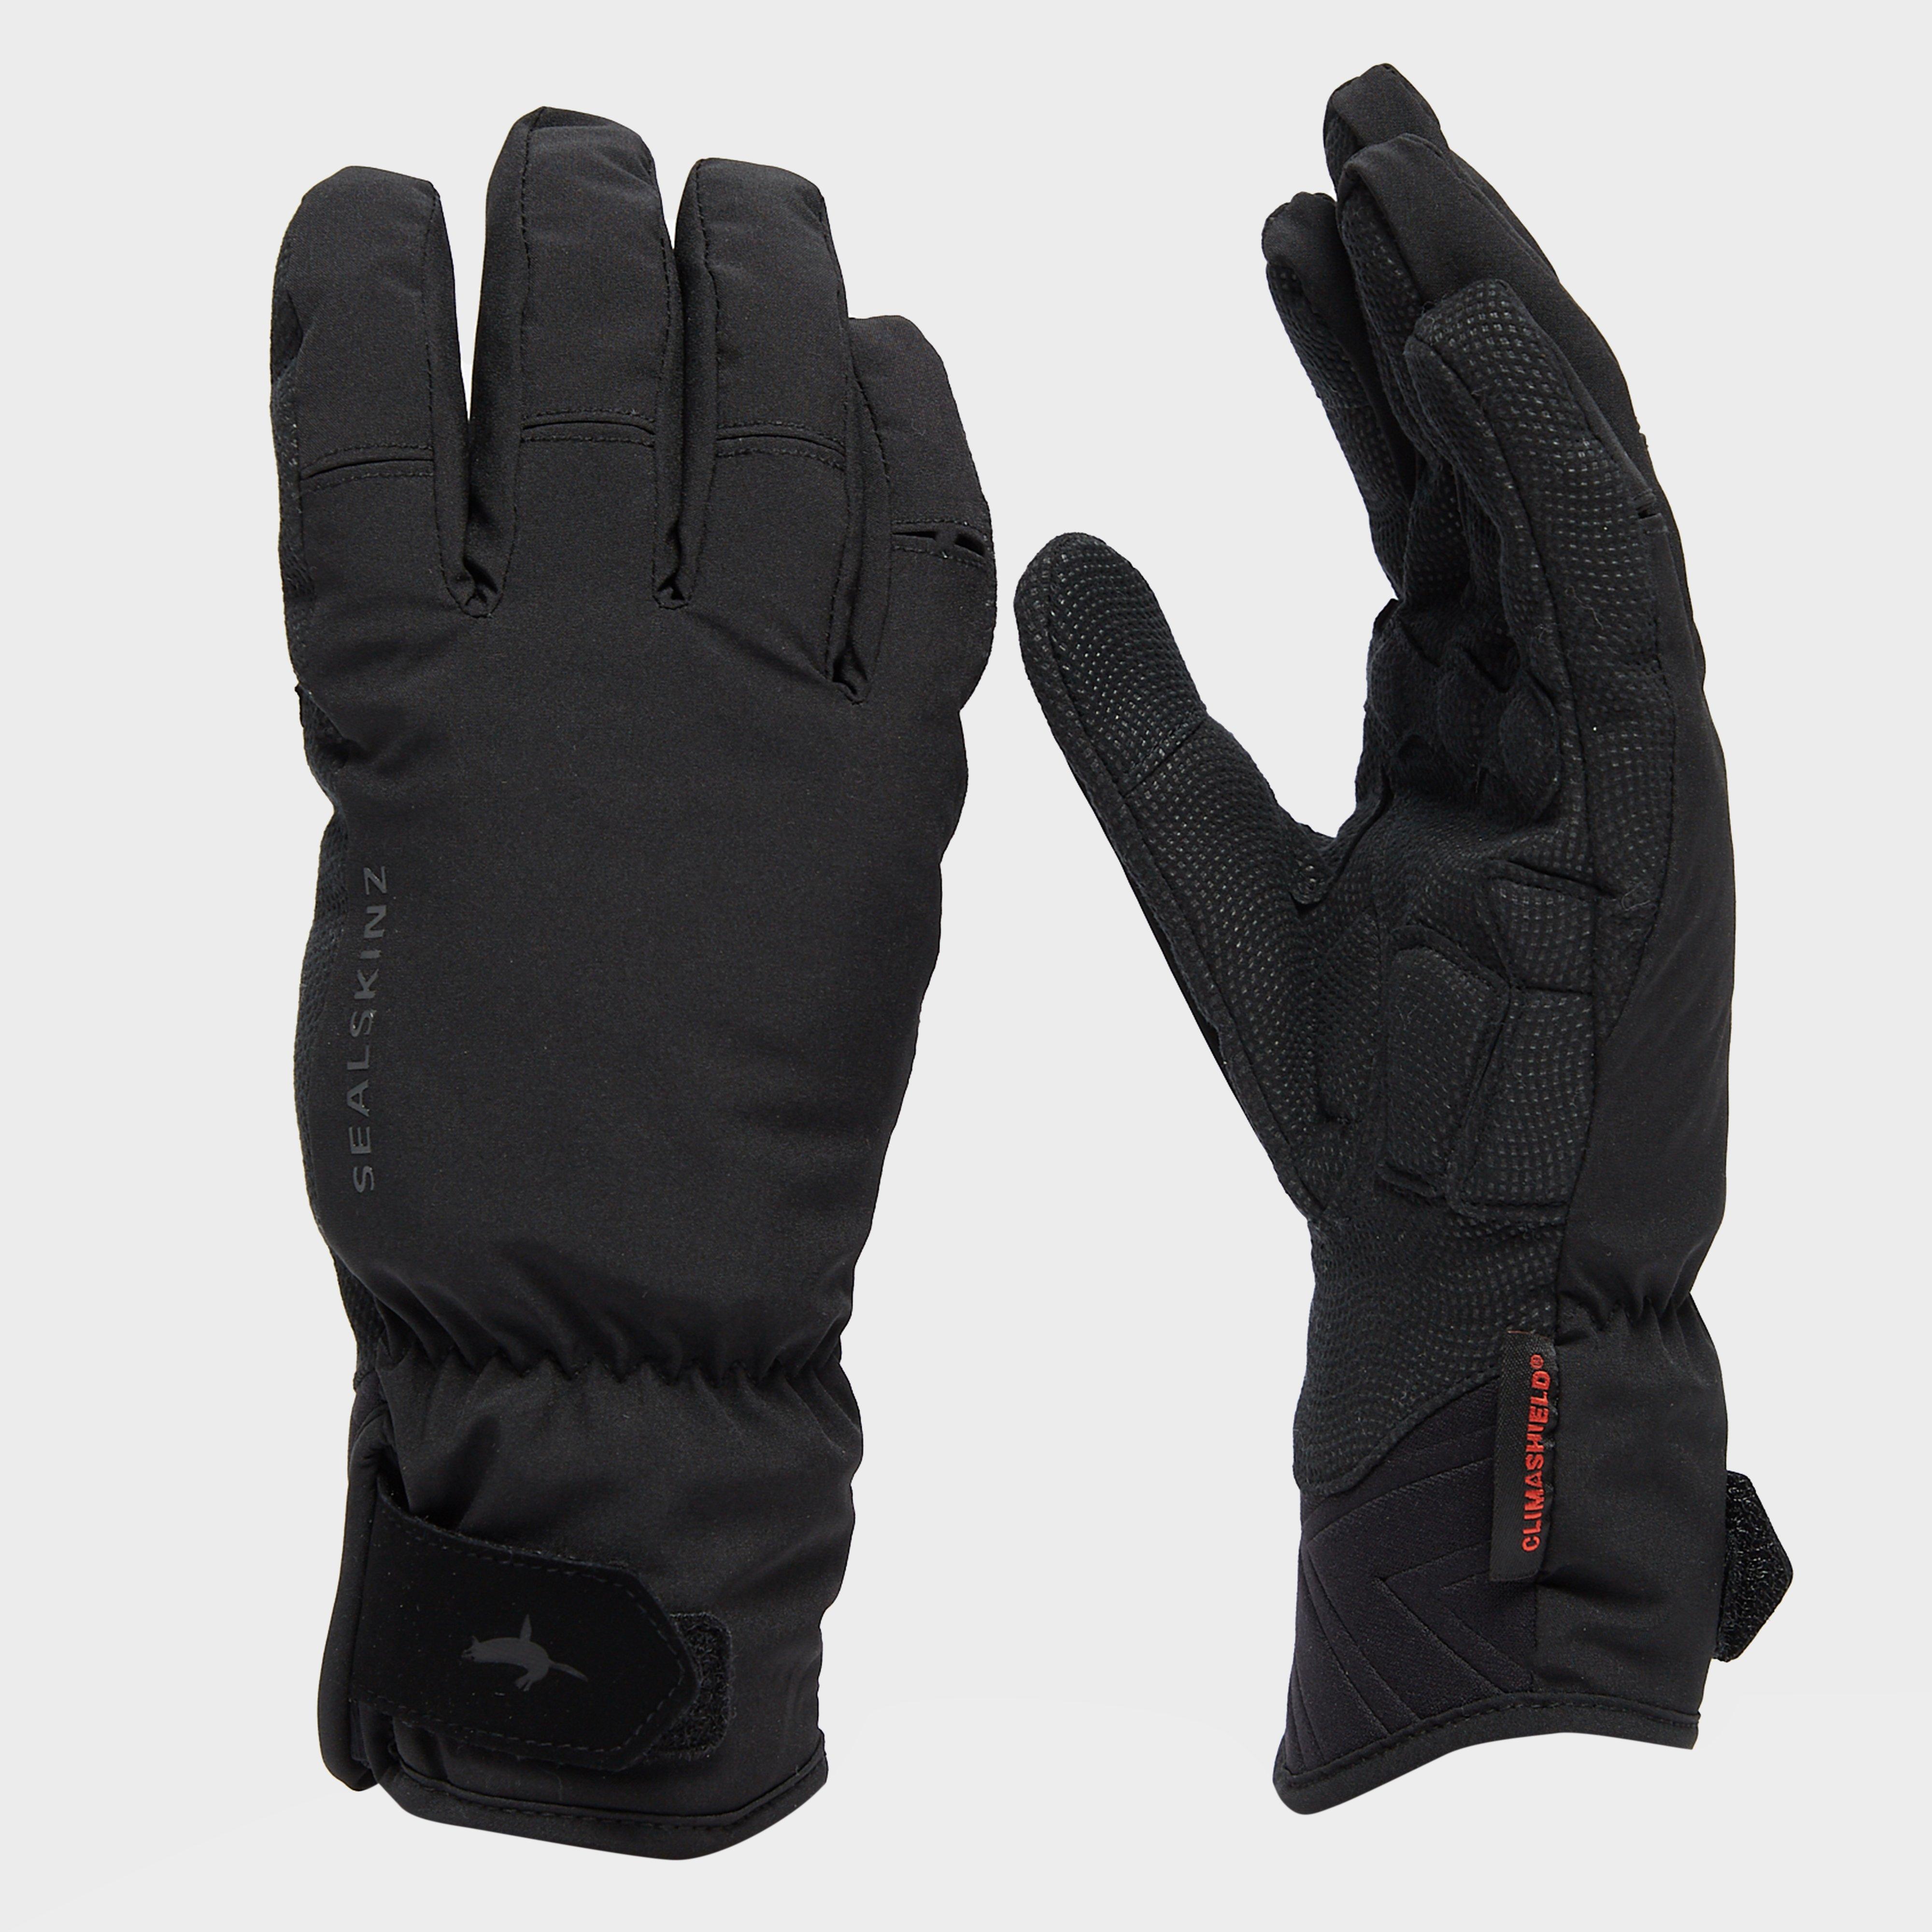 SealSkinz Sealskinz Waterproof Extreme Cold Gloves - Black, Black